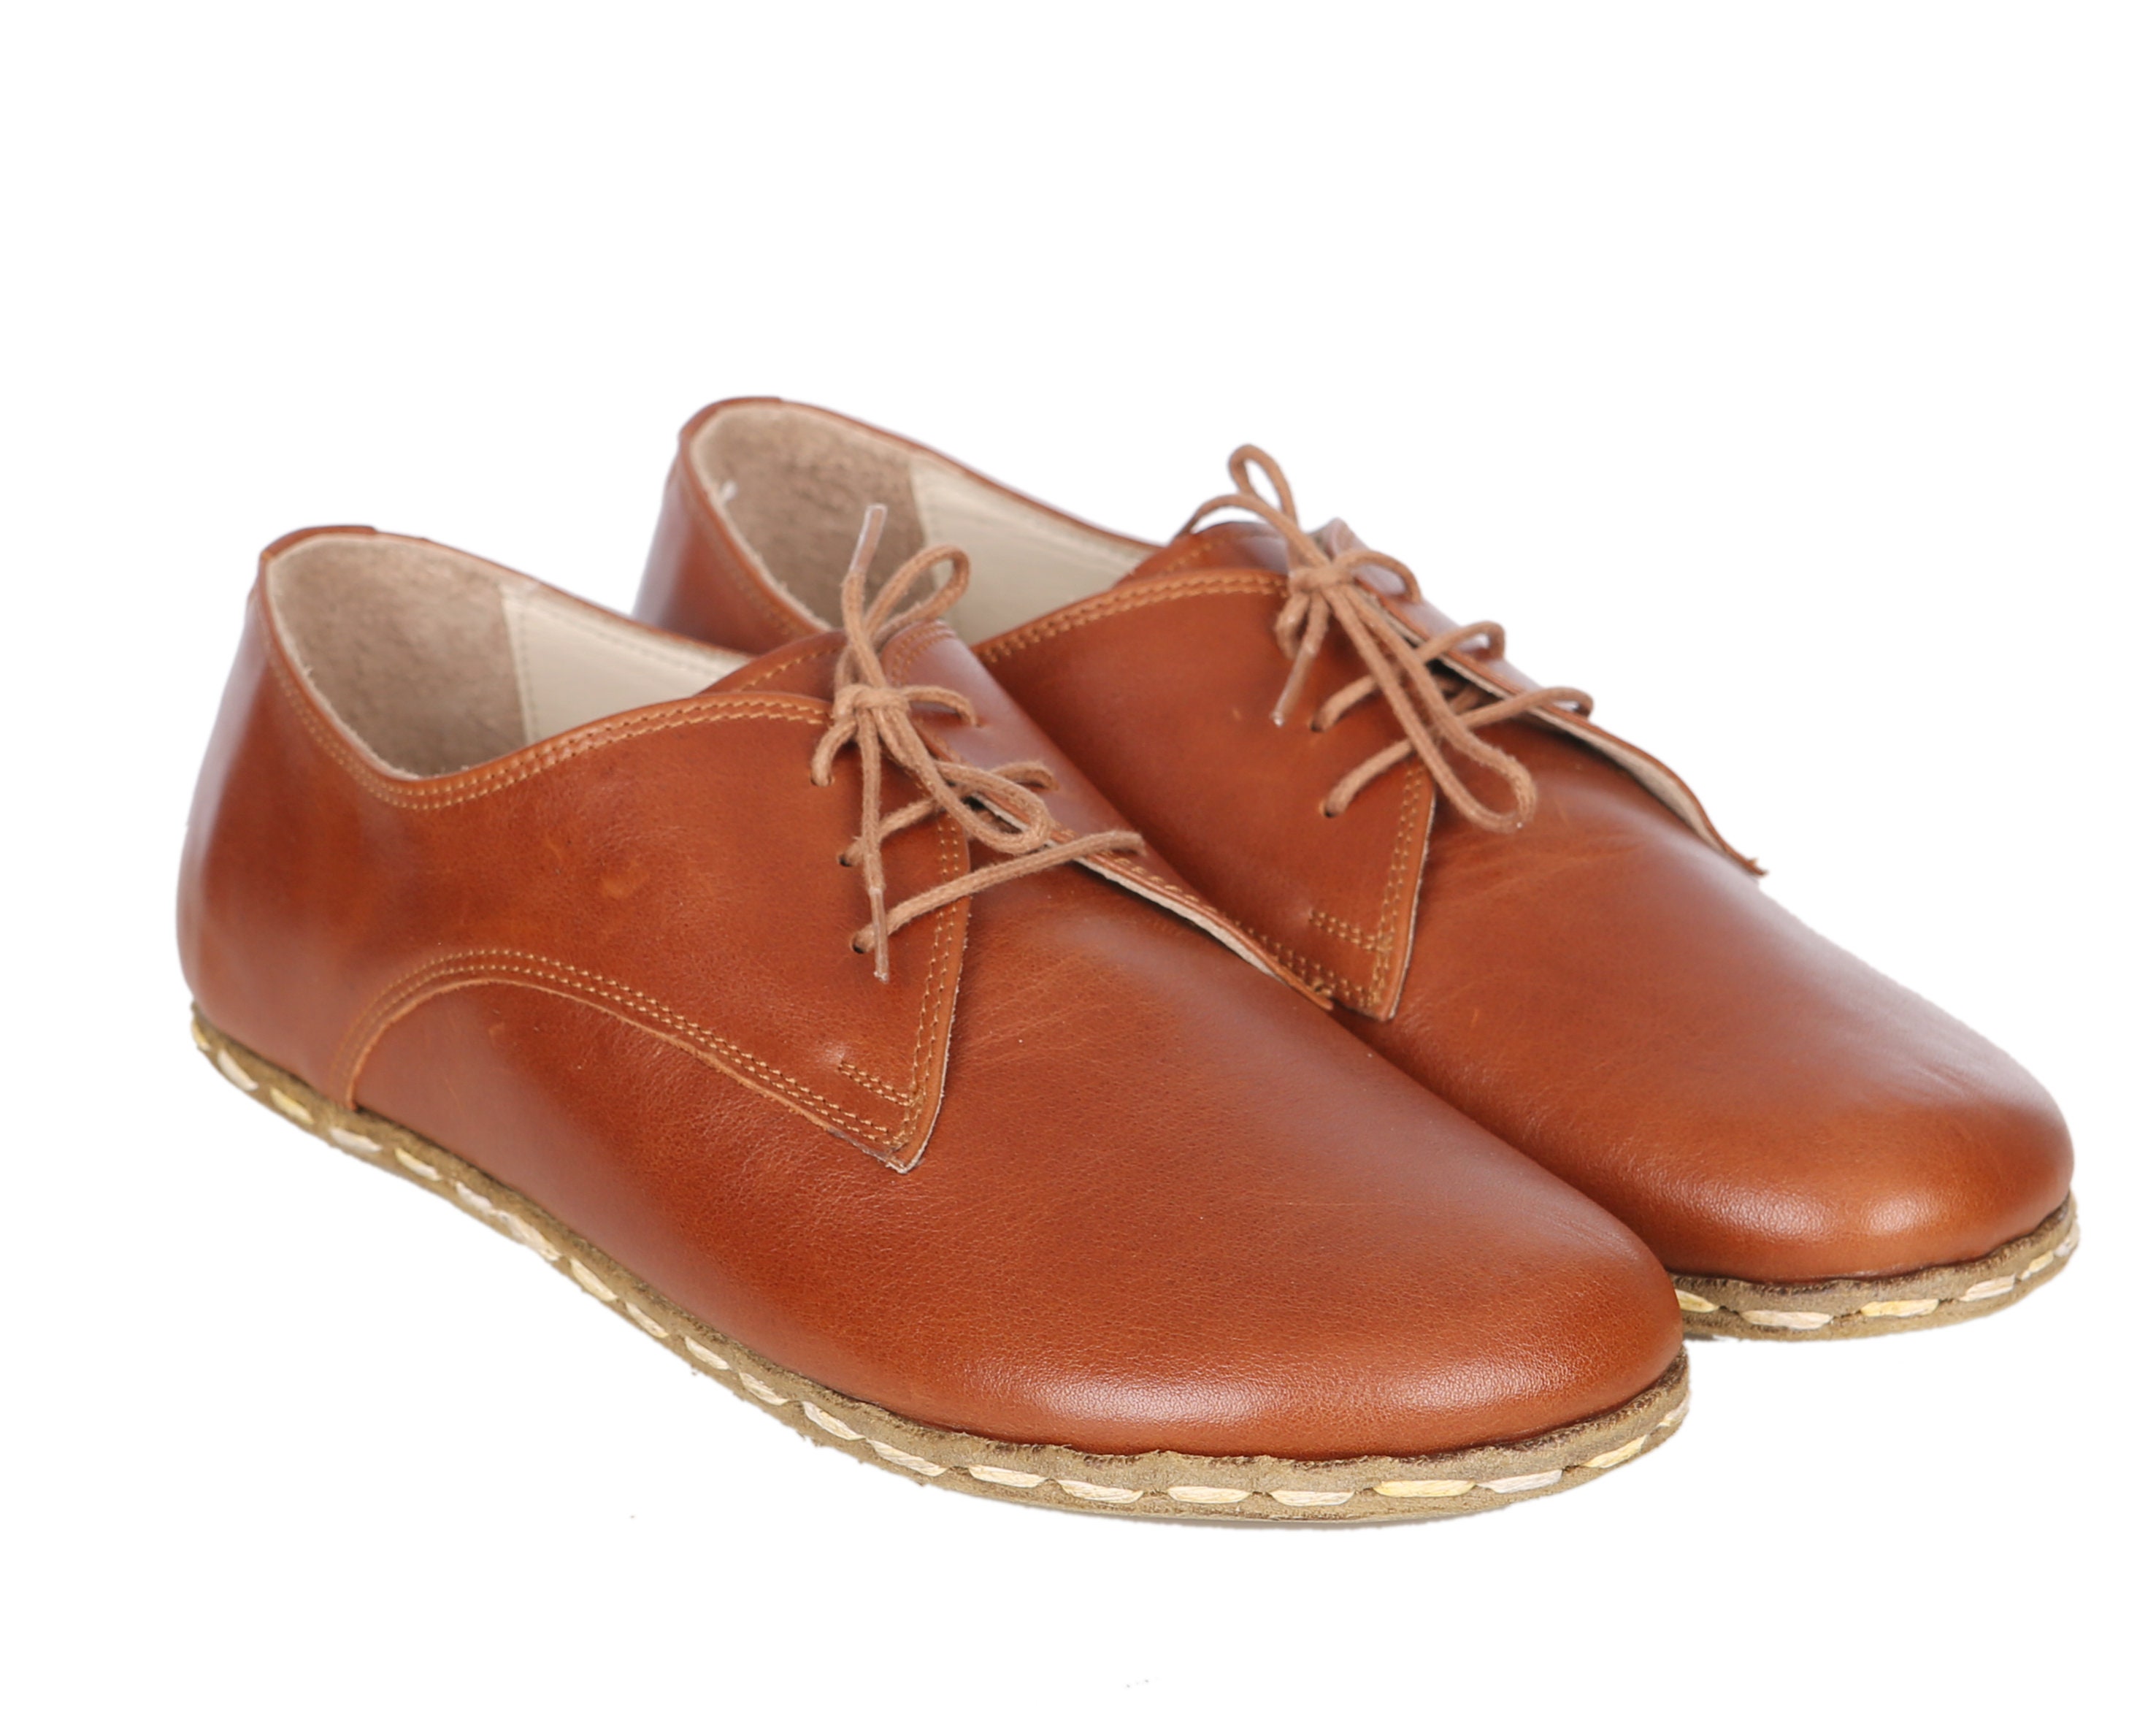 Natural Colorful Slip-On Oxford Barefoot DARK BROWN Leather Handmade Men SPORT Yemeni Shoes